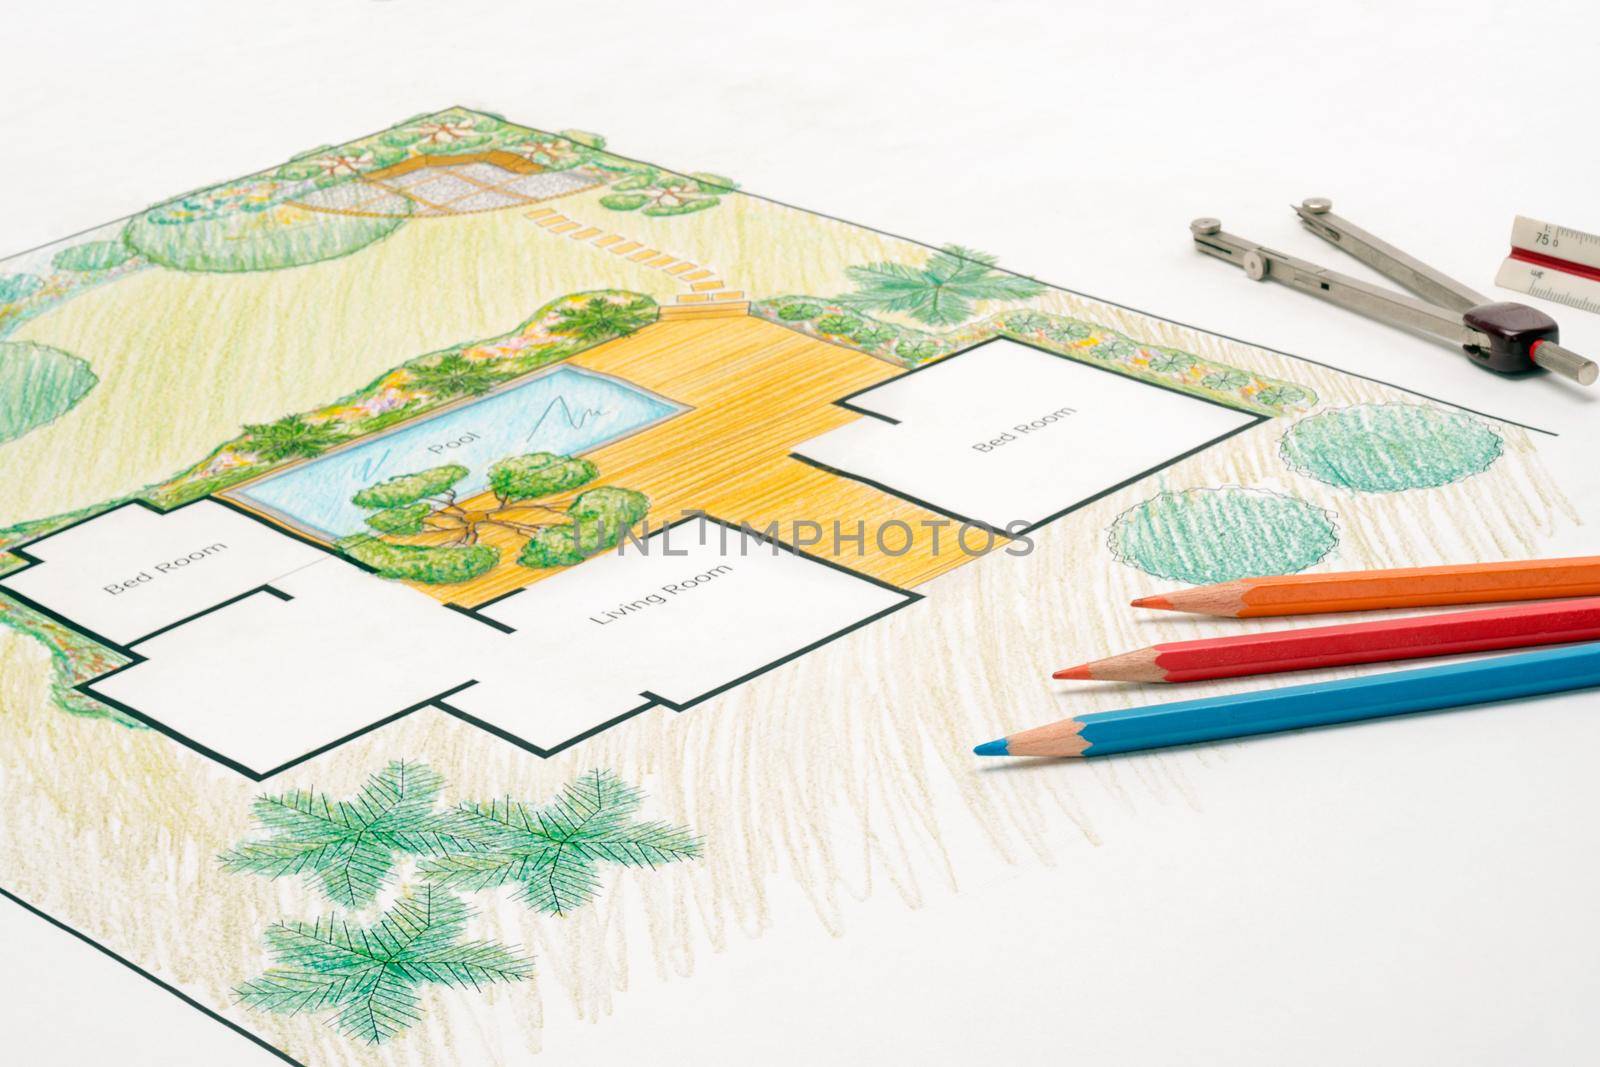 Landscape architect design backyard plan for villa by toa55